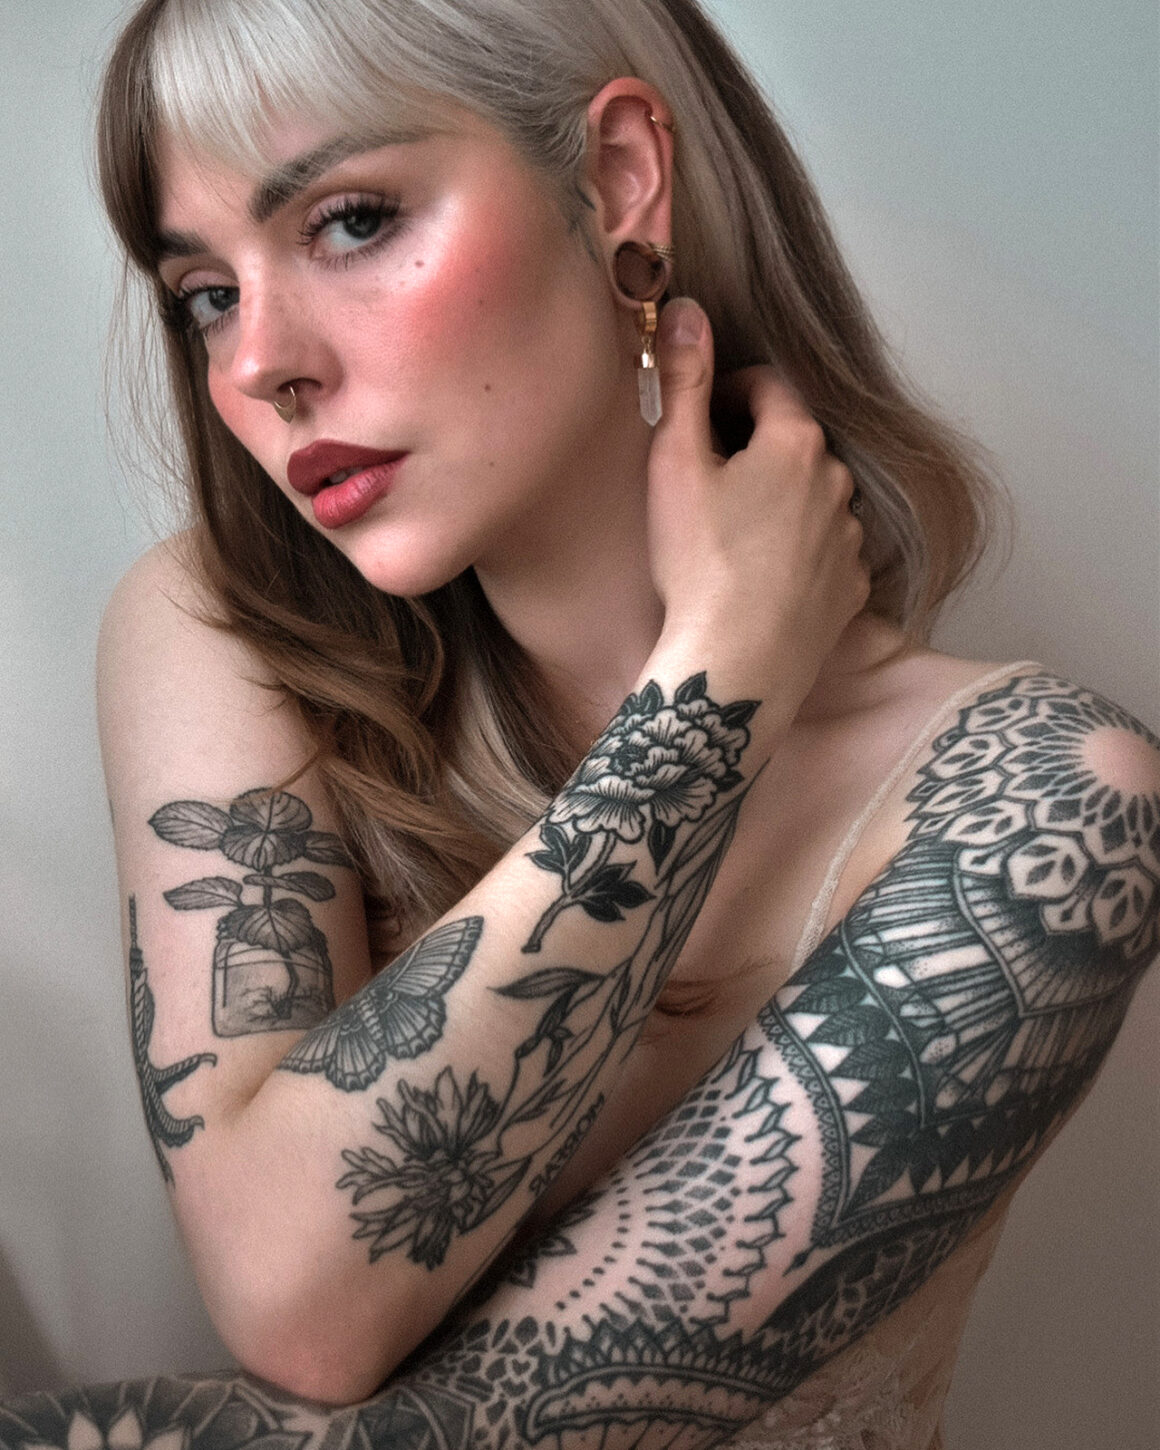 Emilie, modelo de tatuajes, @emelieaxelson